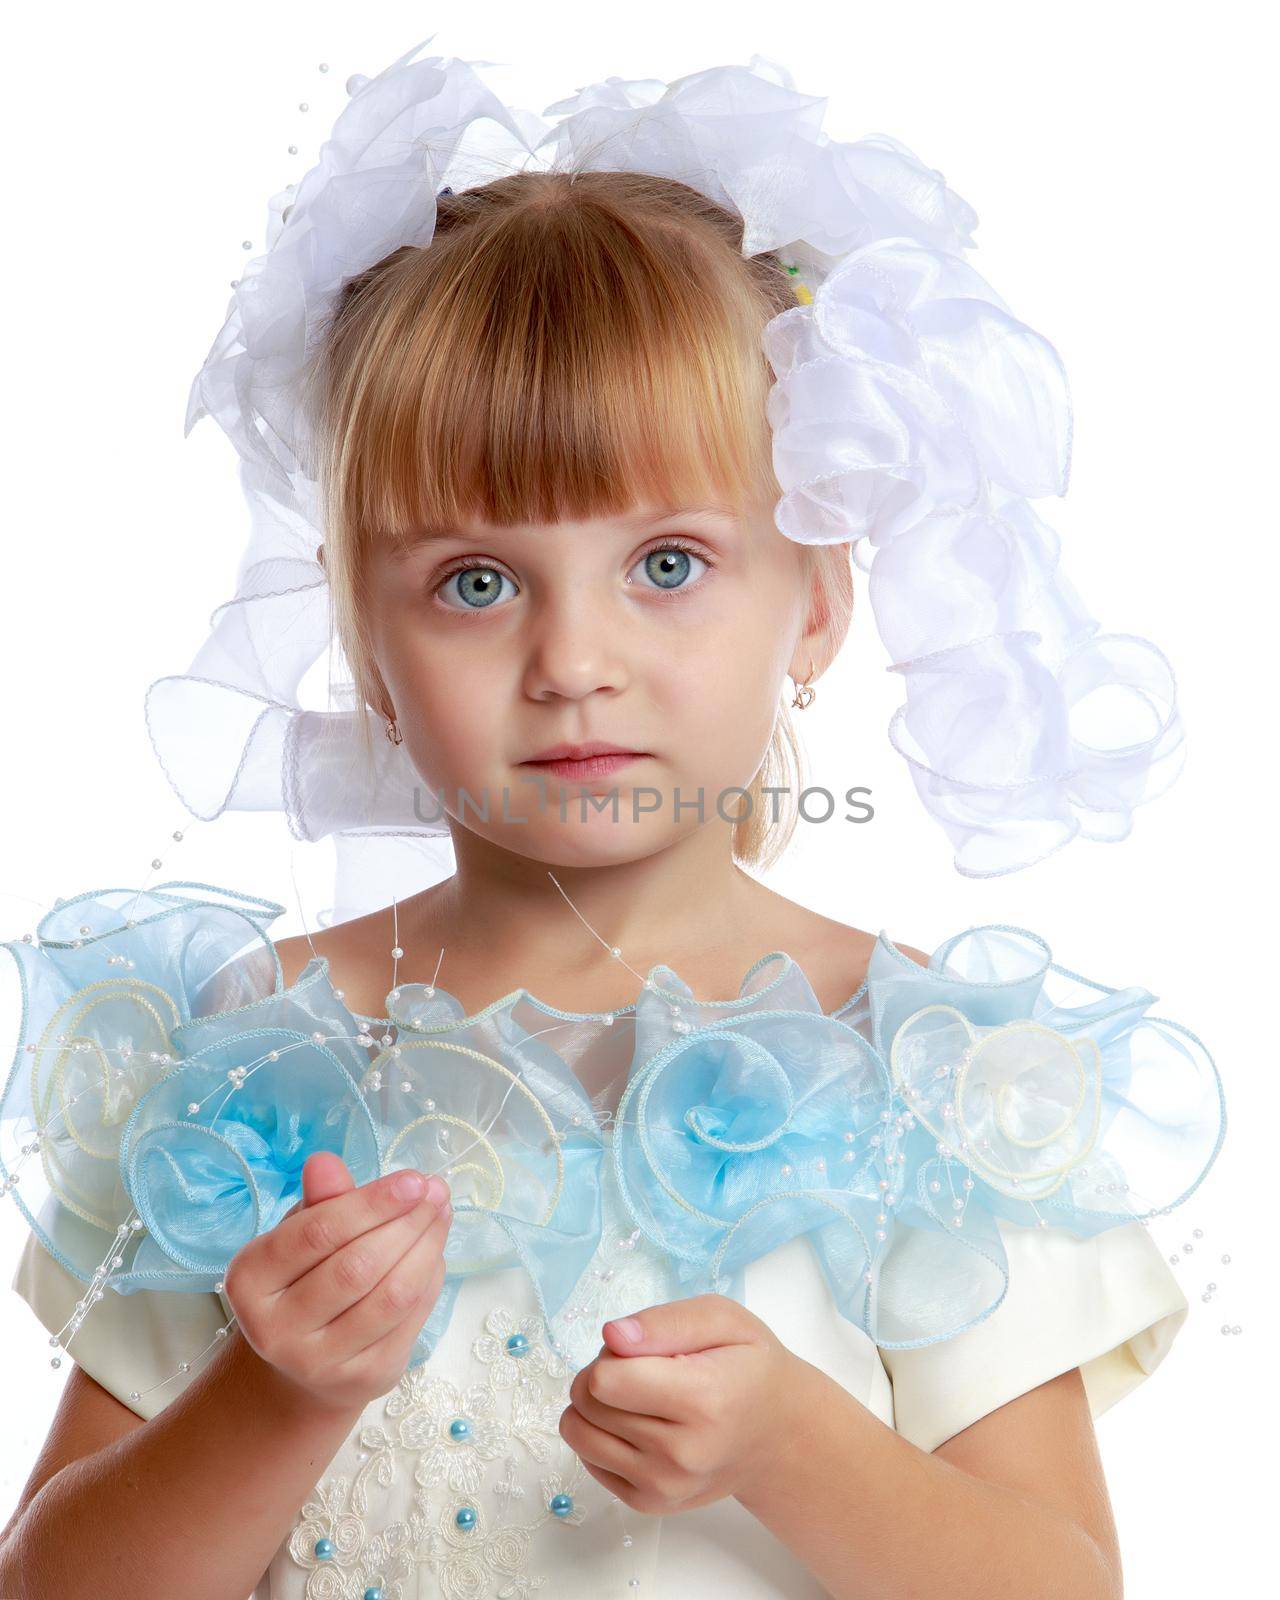 Little girl princess close-up. by kolesnikov_studio